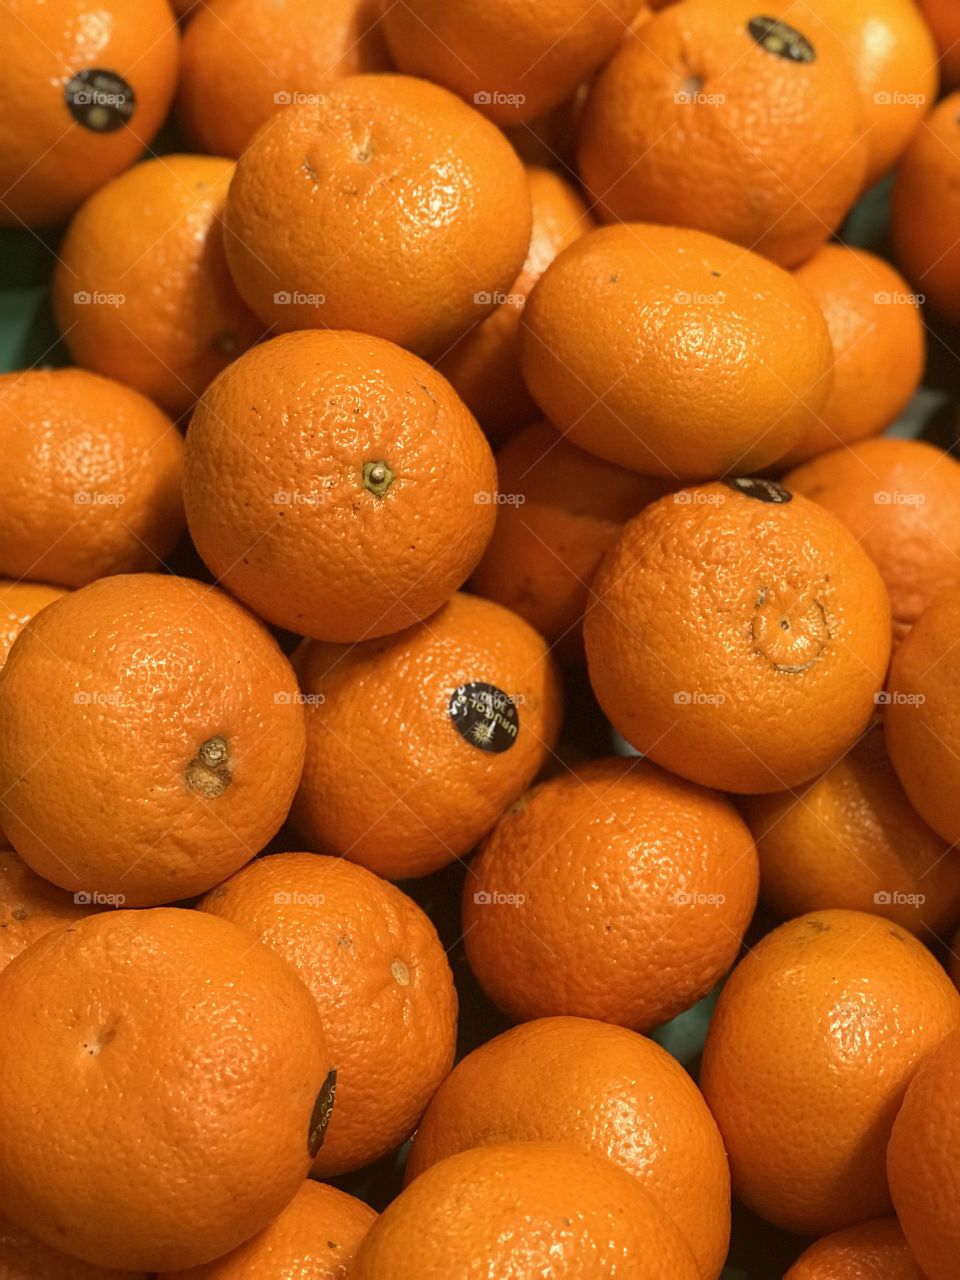 Brasilian laranjas 